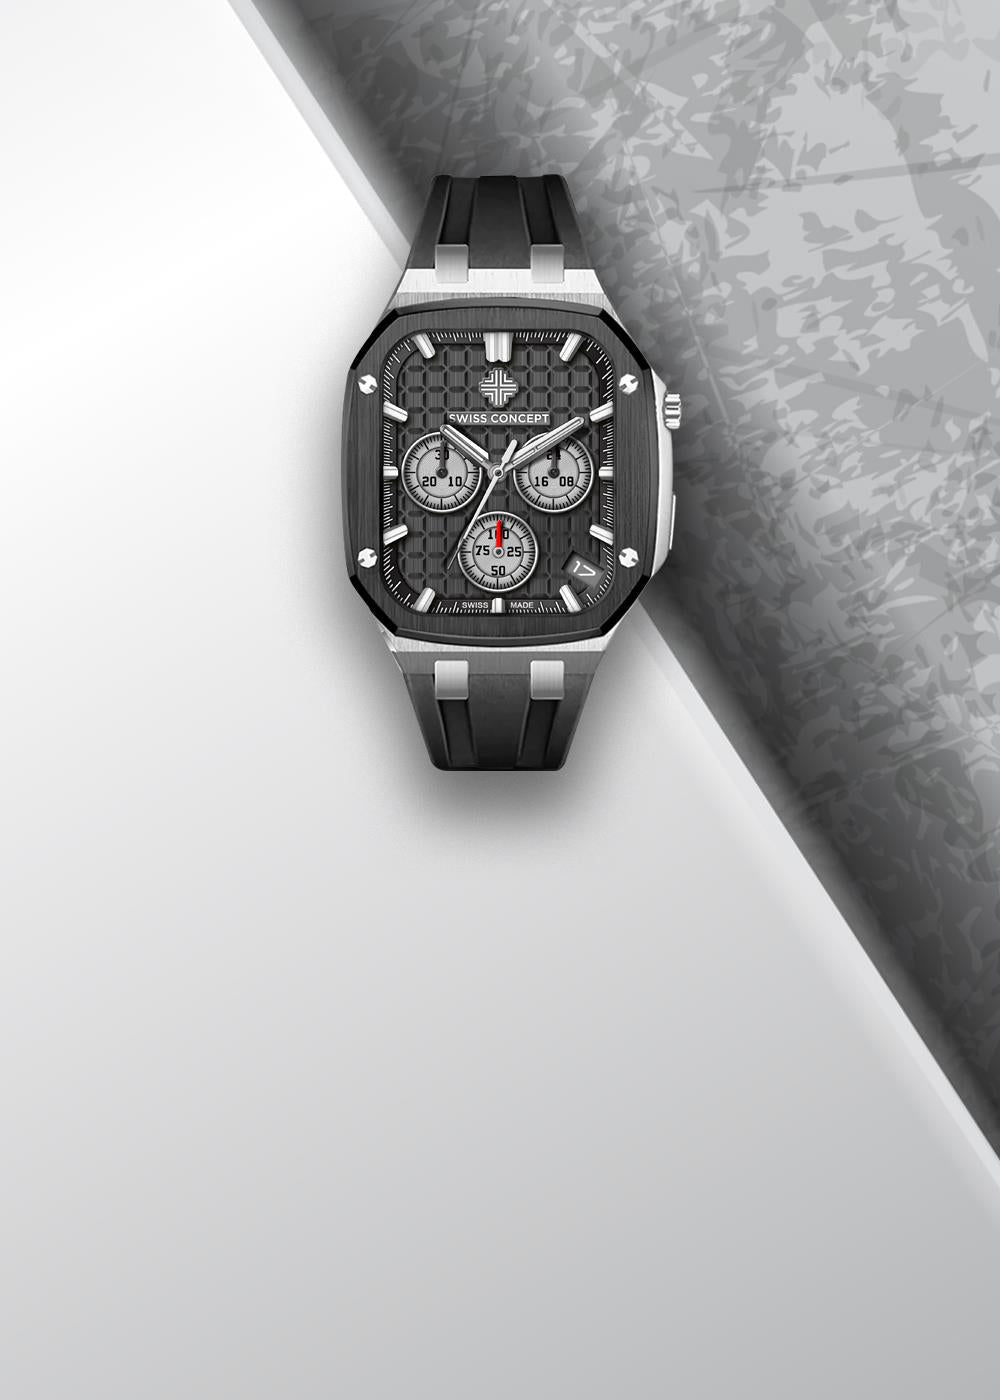 Swiss Concept Royal Sport Edition Apple Watch Case